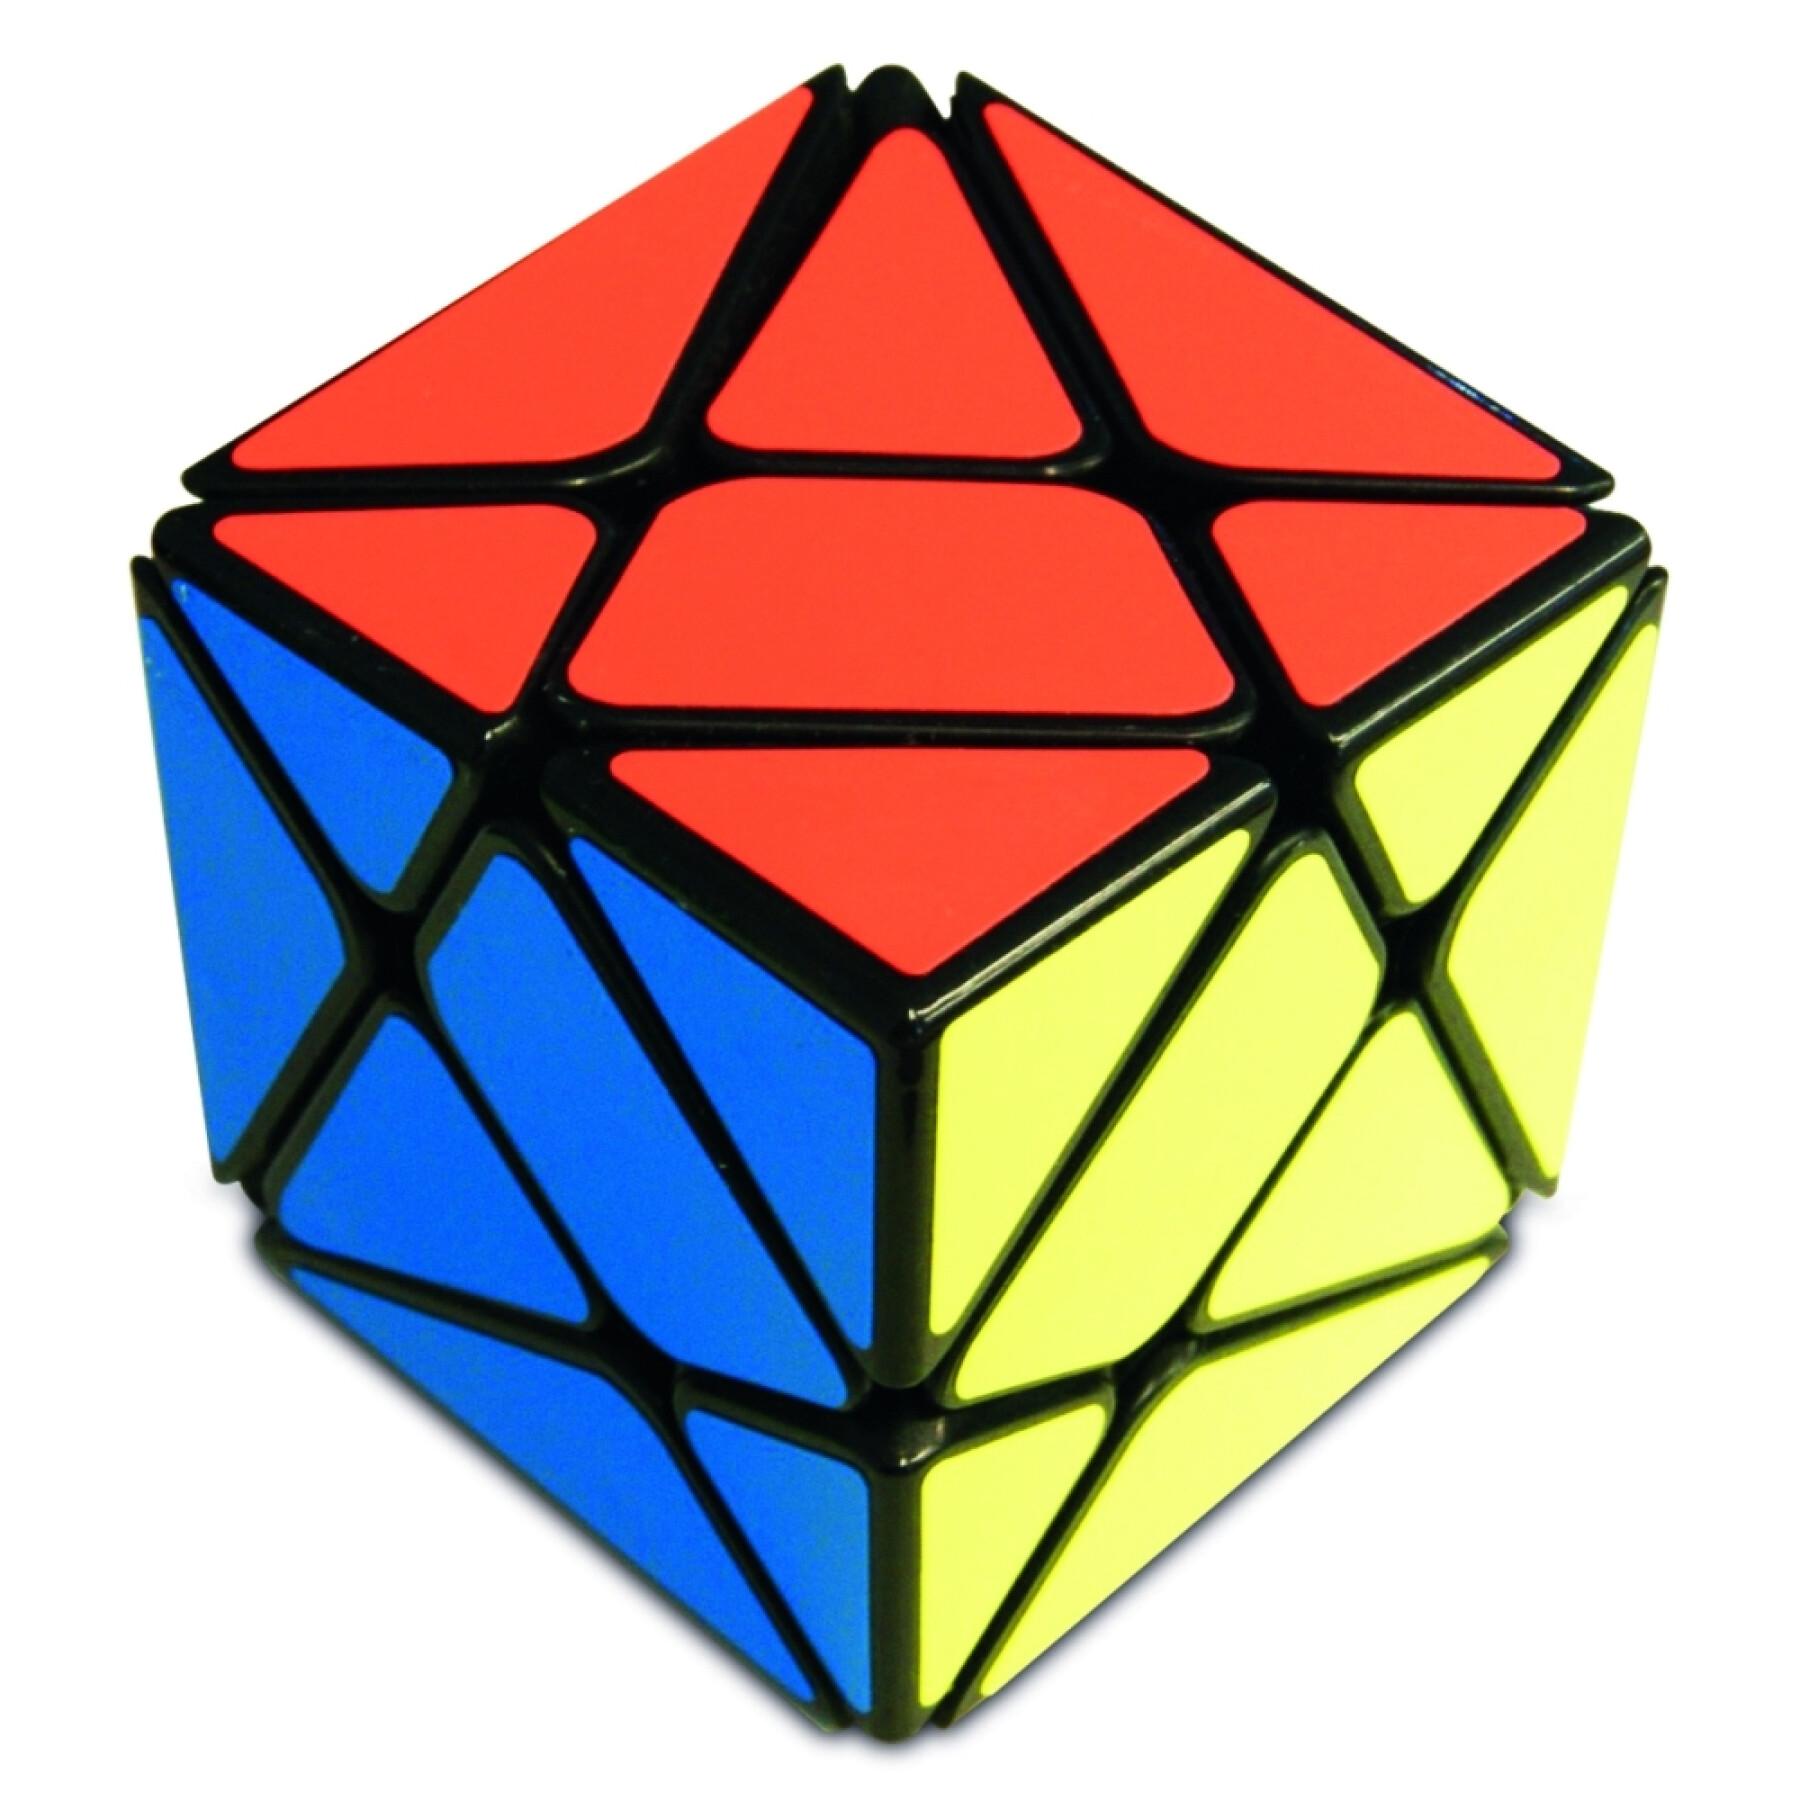 Cube magique Cayro Axis